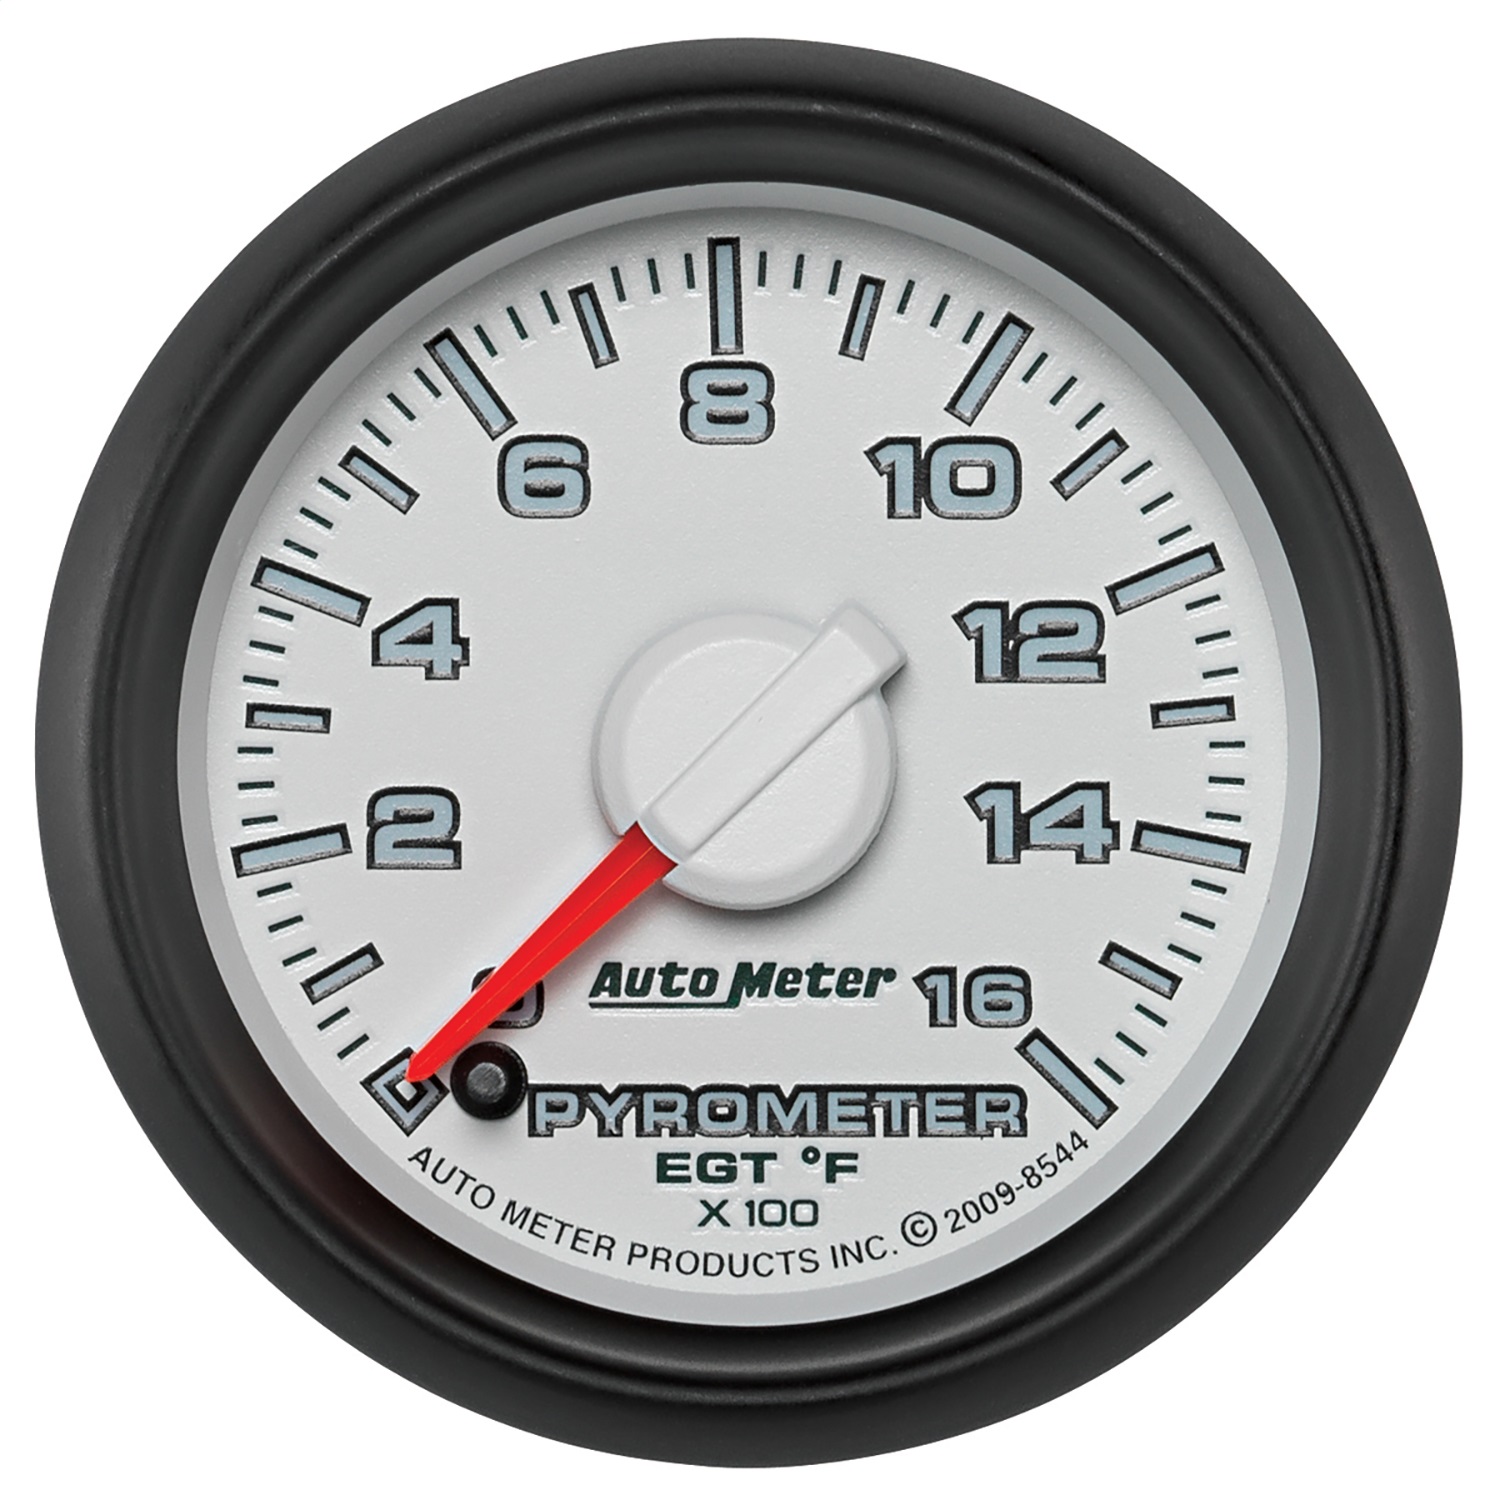 Auto Meter Auto Meter 8544 Factory Match; Pyrometer/EGT Gauge